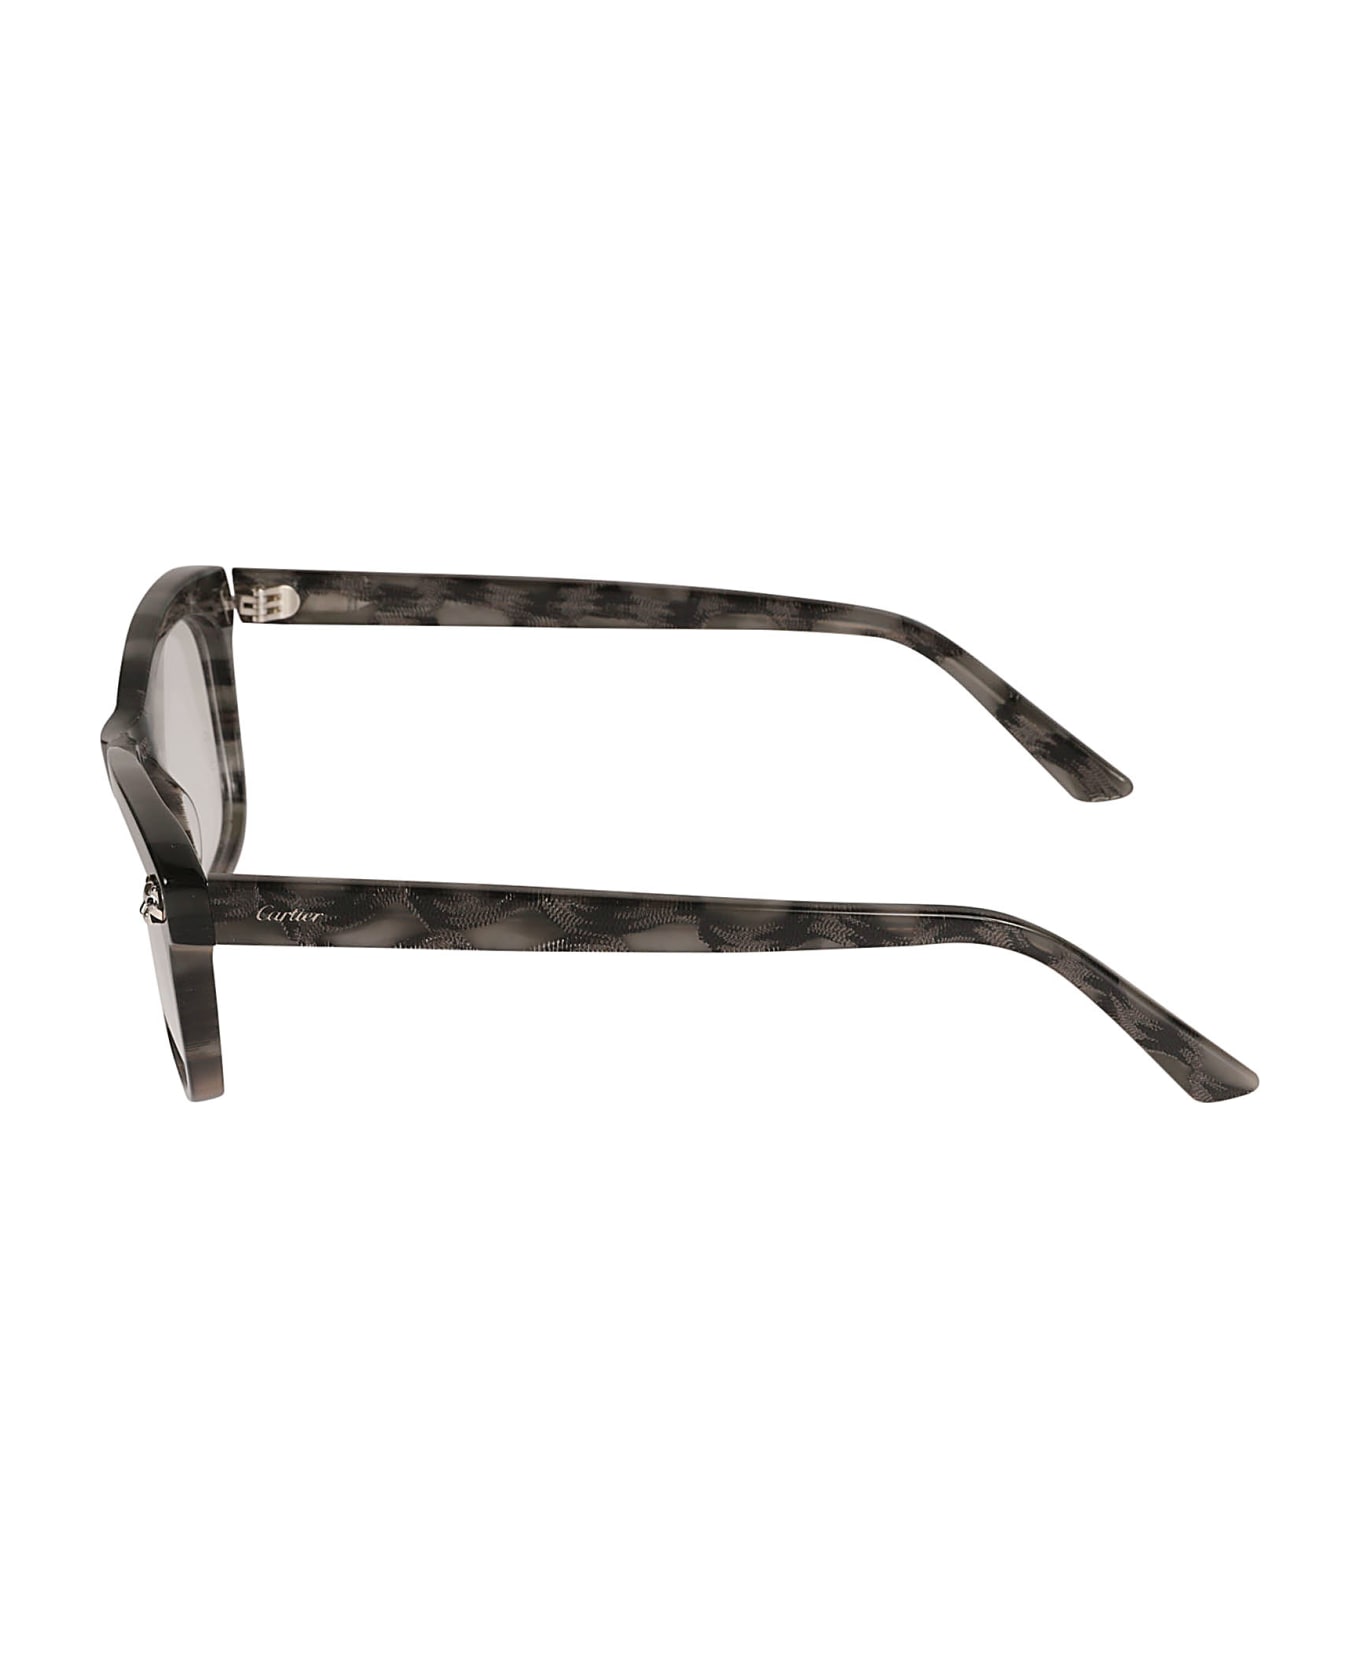 Cartier Eyewear Demo Rectangular Glasses - 008 Optic Nerve Fourteener Polarized Sunglasses